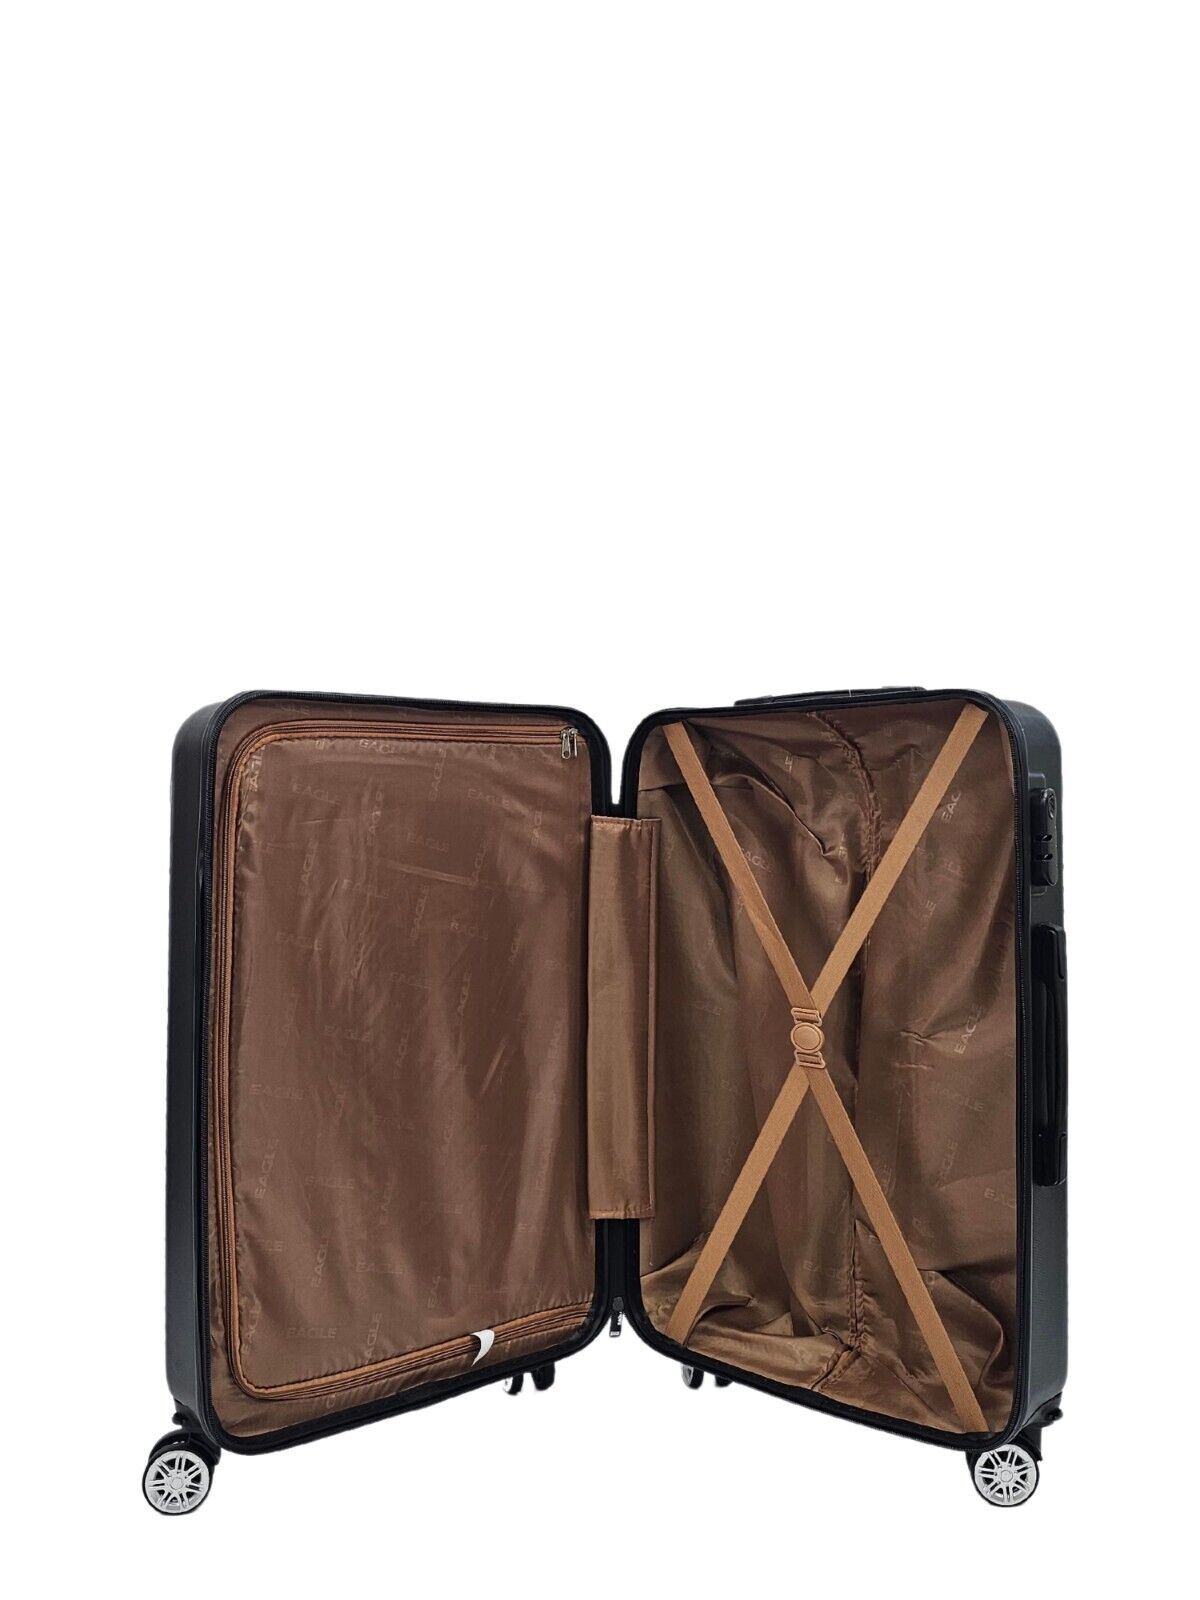 Hard Shell Cabin 8 Wheel Luggage Case Travel Bag